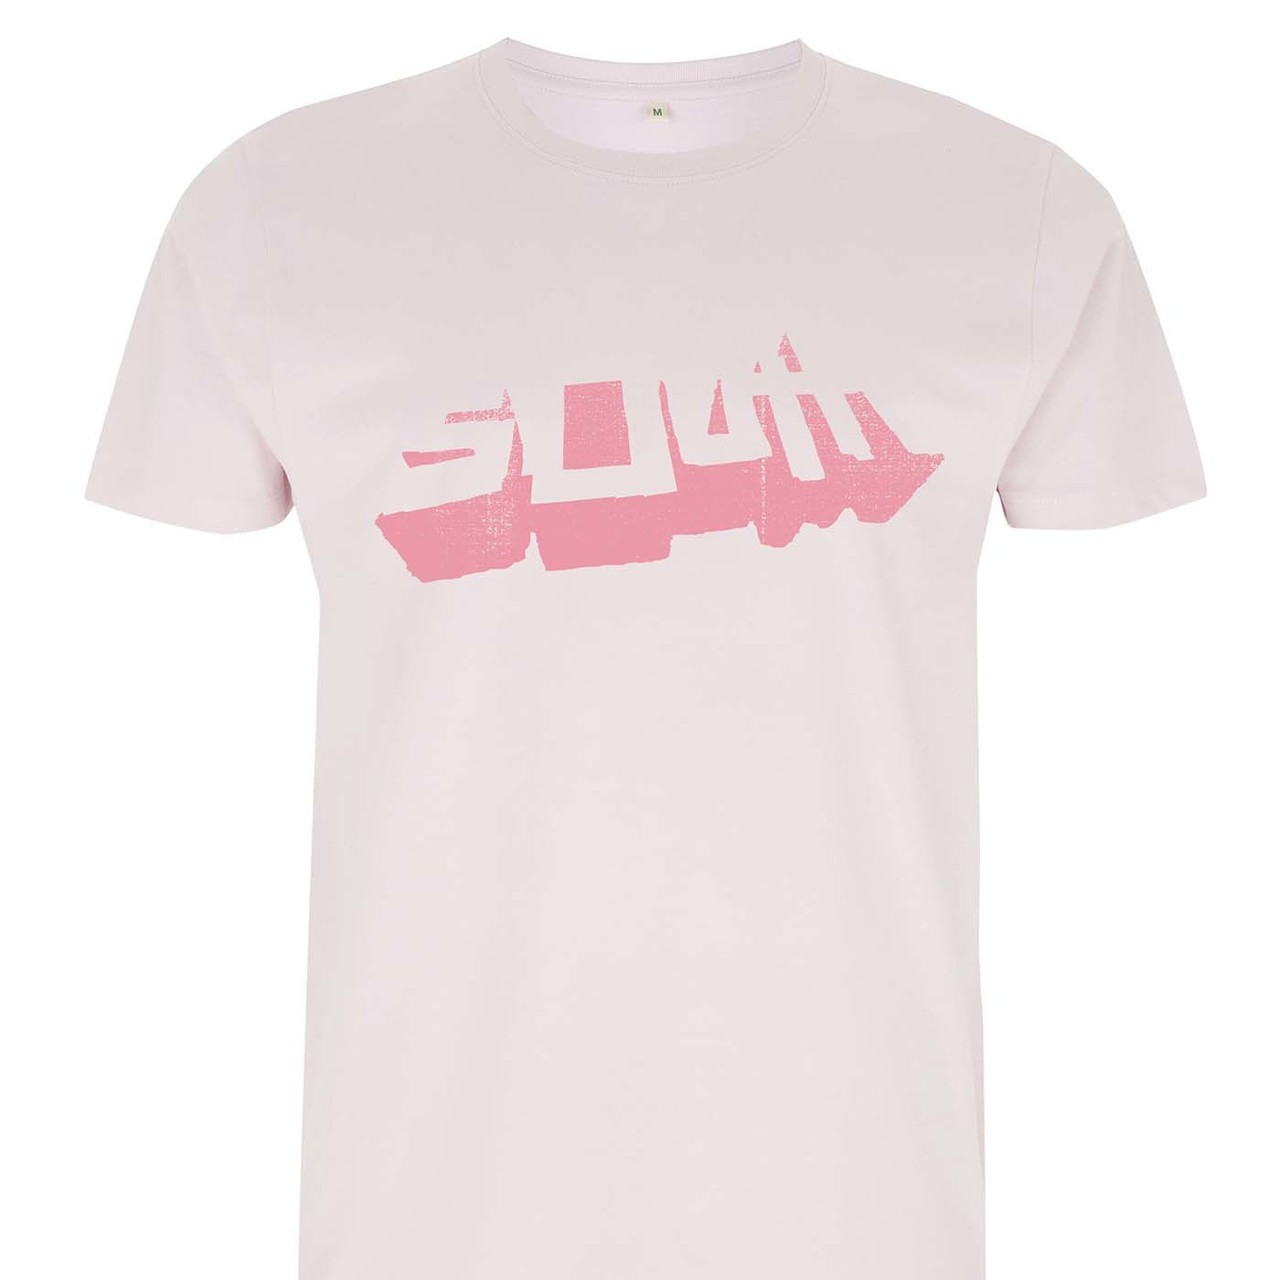 File:2020 south photocopy pink on pink.jpg